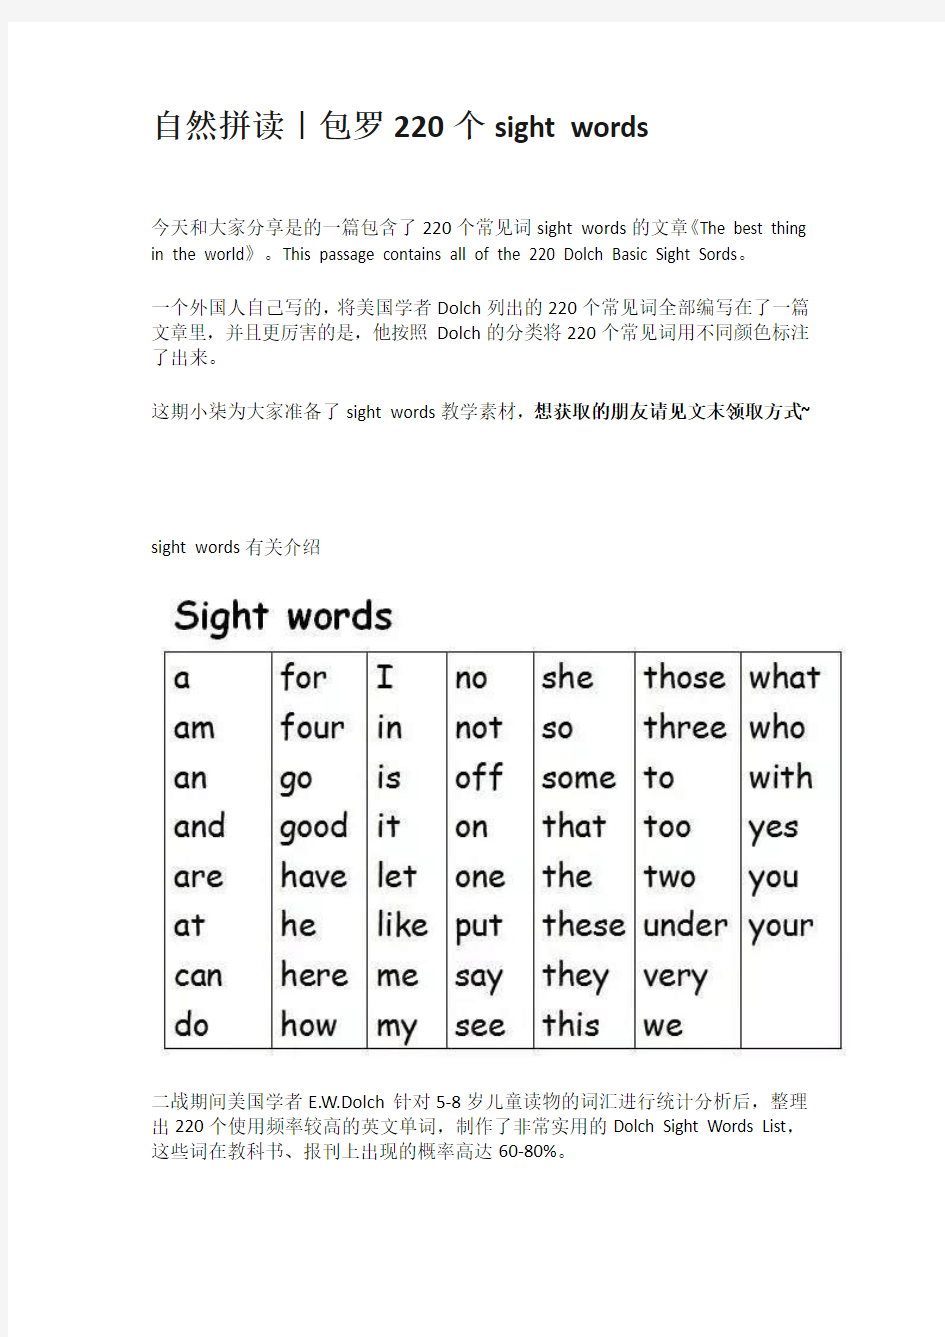 自然拼读-sight words